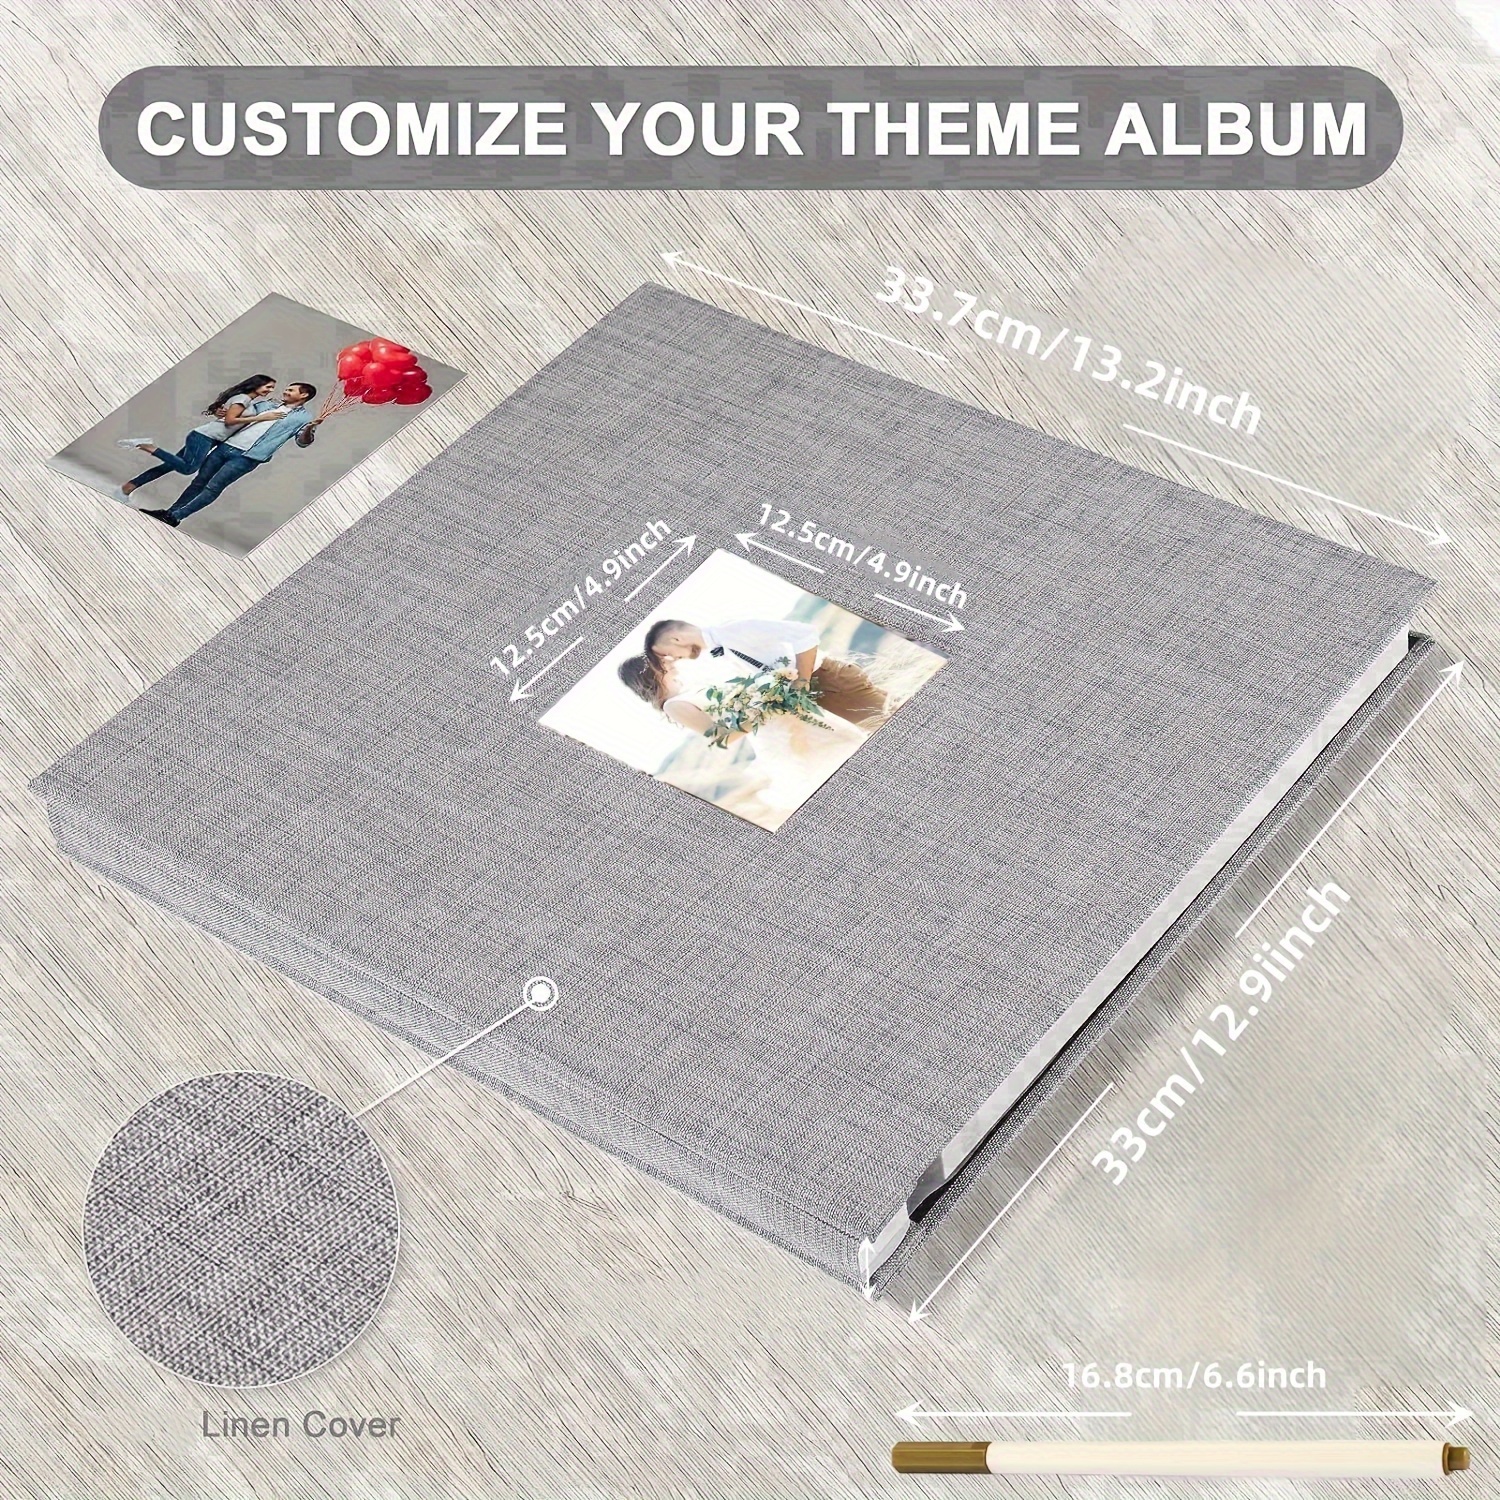 Self-adhesive Anniversary Album, Family Photo Album, Travel Photo Album,  Scrapbook Album, Large Photo Album 